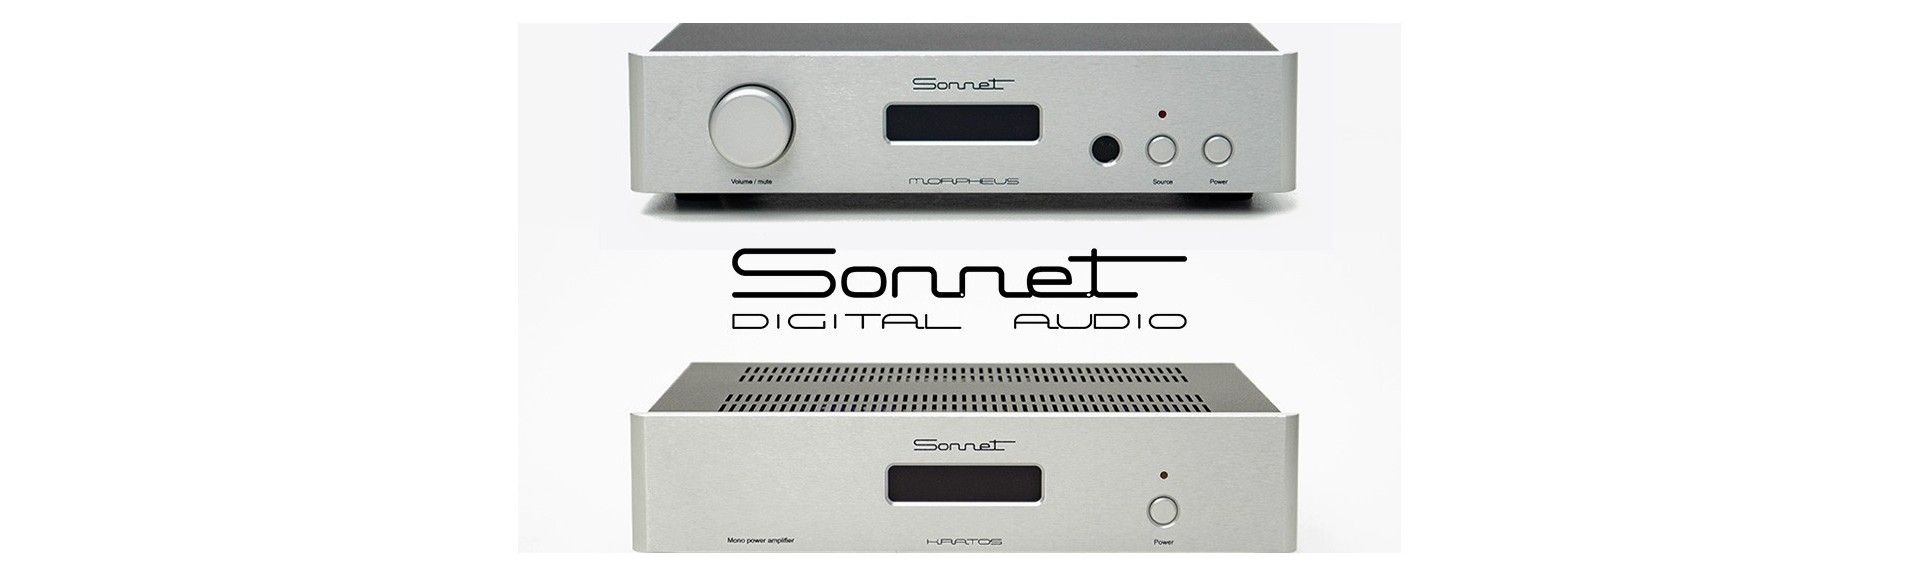 Meet our new company: Sonnet Digital Audio!